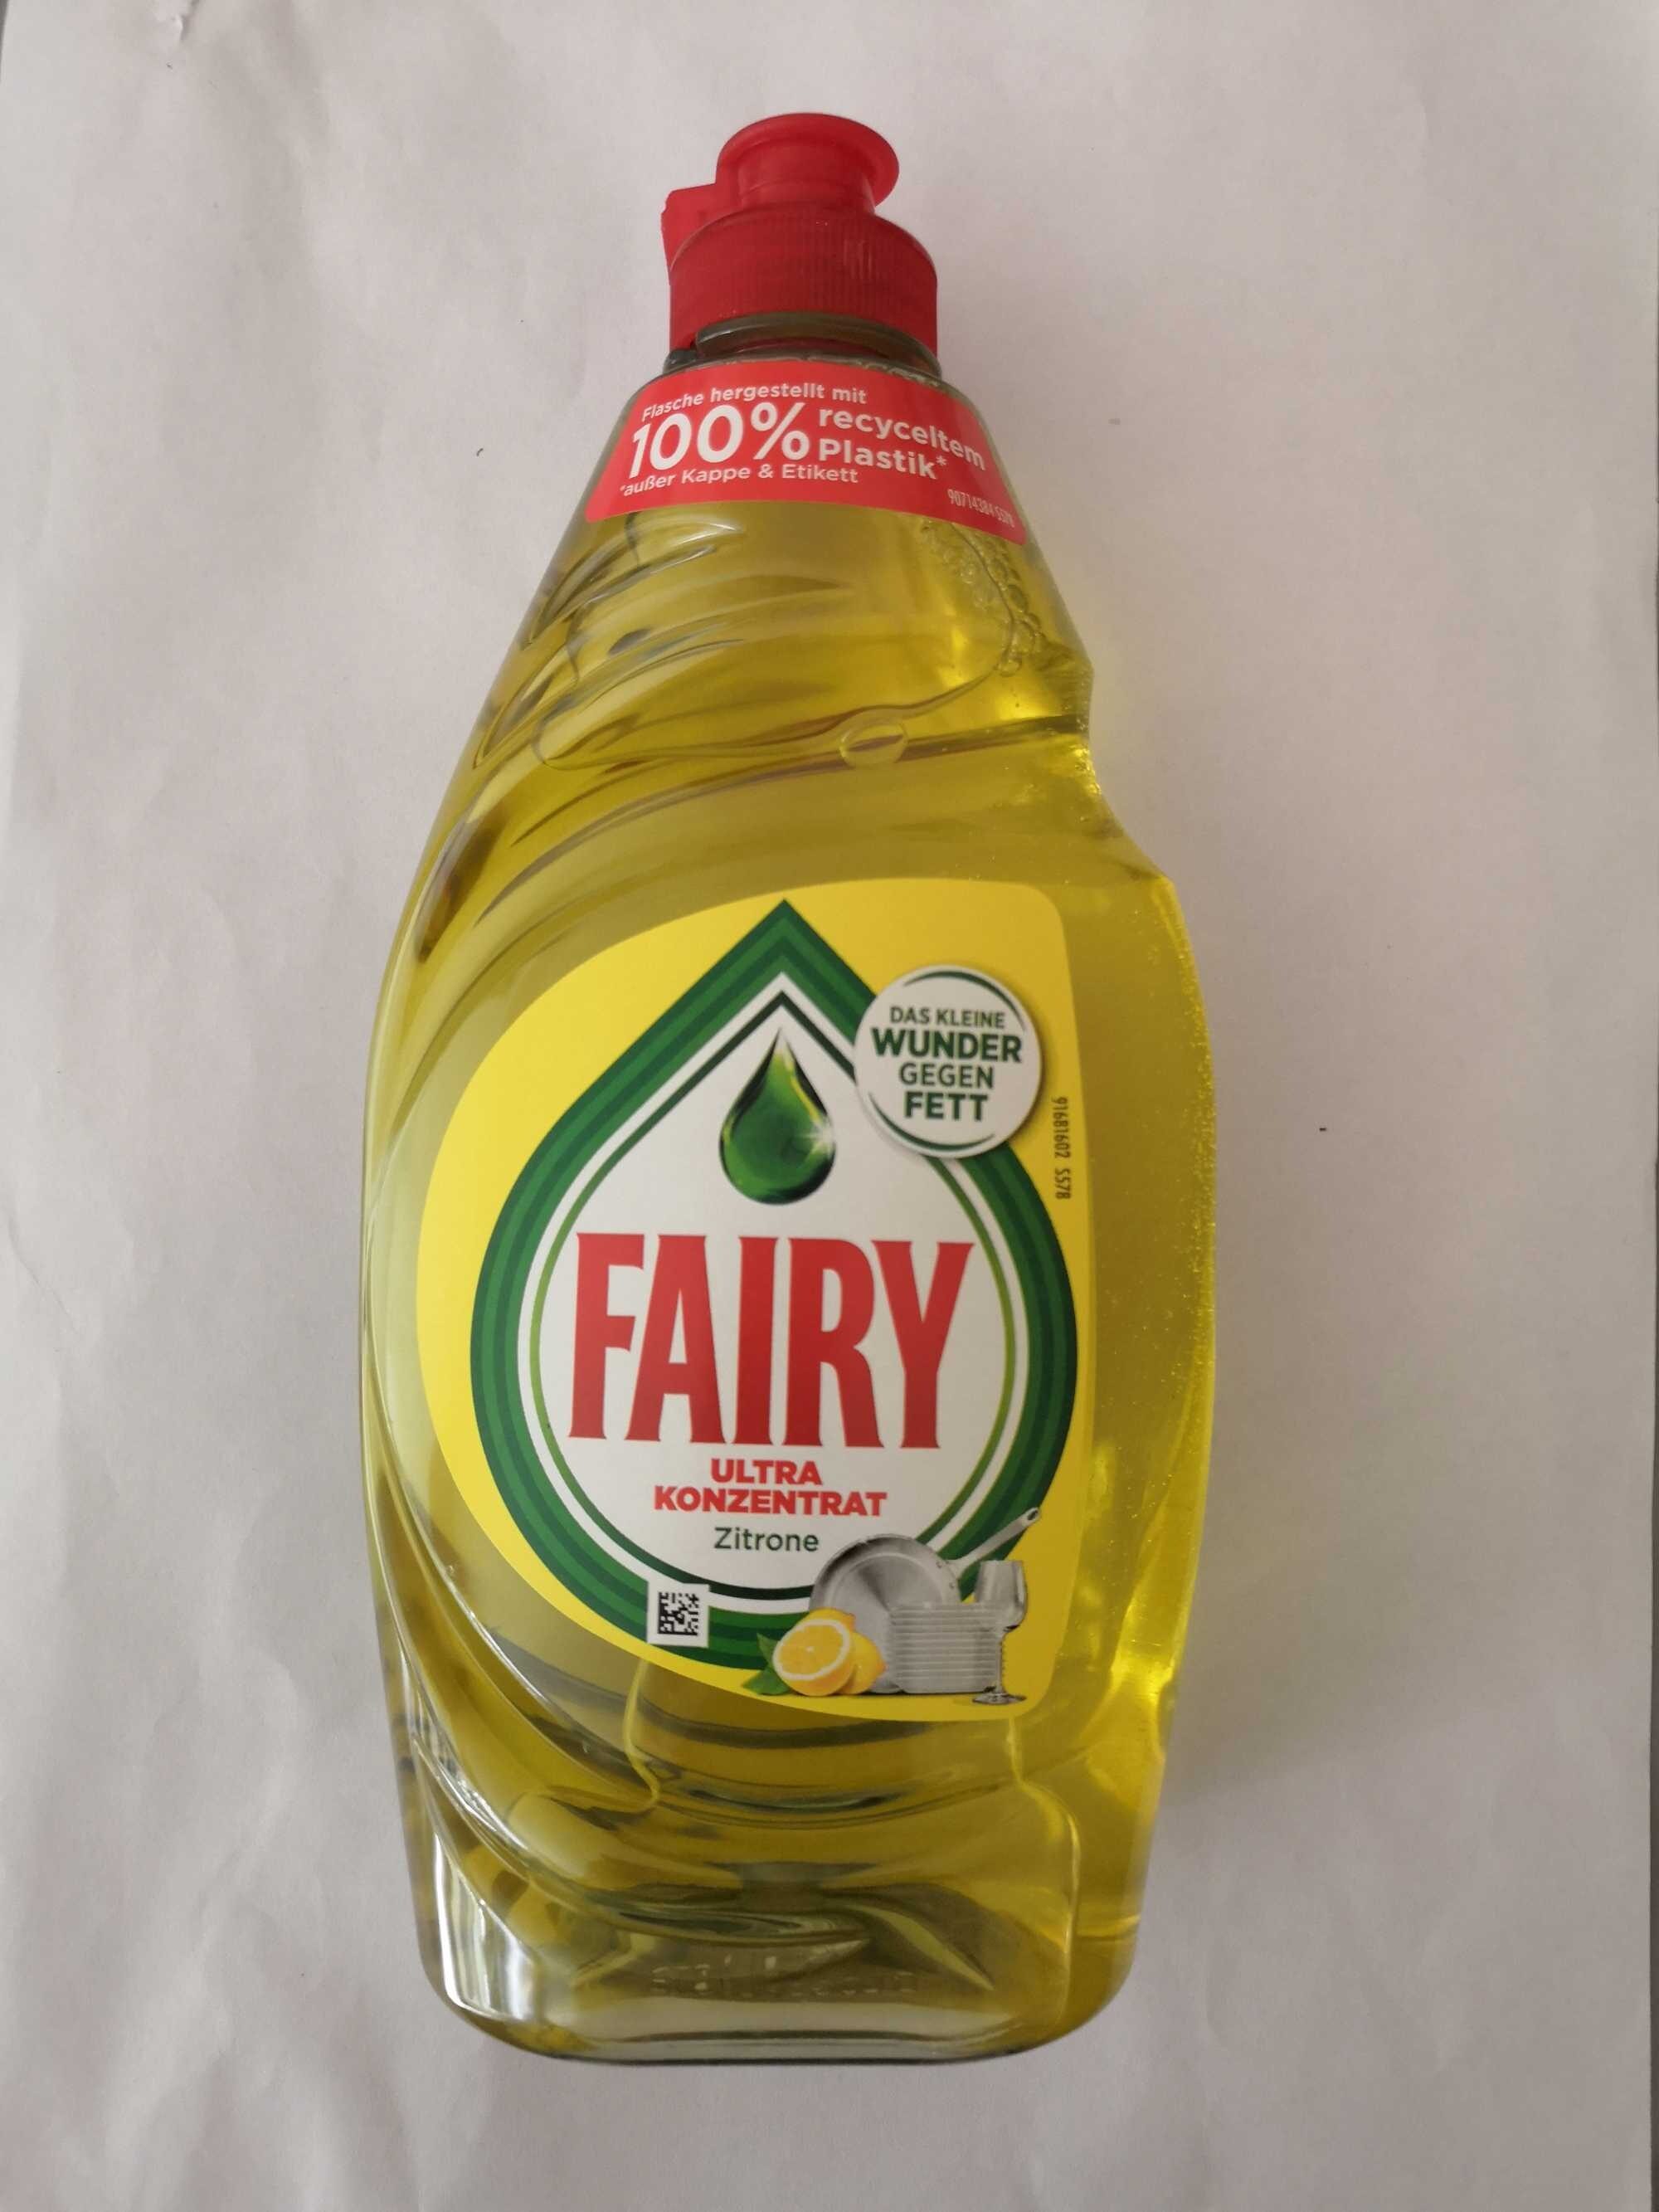 Fairy Ultra Konzentrat Zitrone - 製品 - de